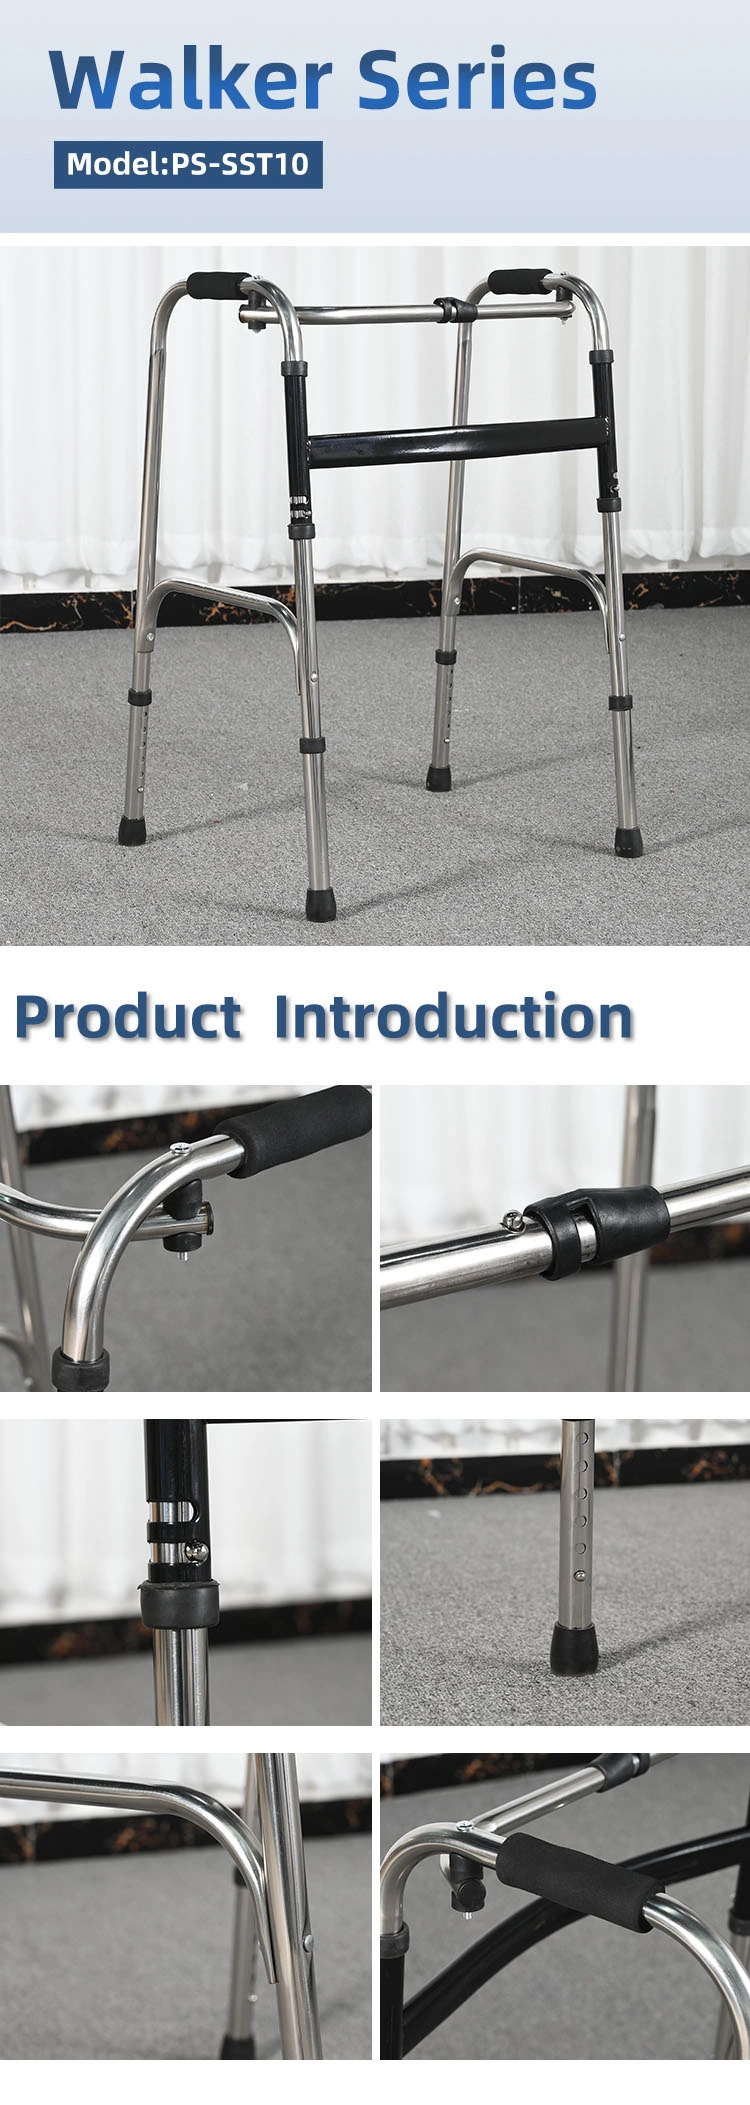 Wholesale Price Stainless Steel Walker Adjustable Walking Aids with Wheels